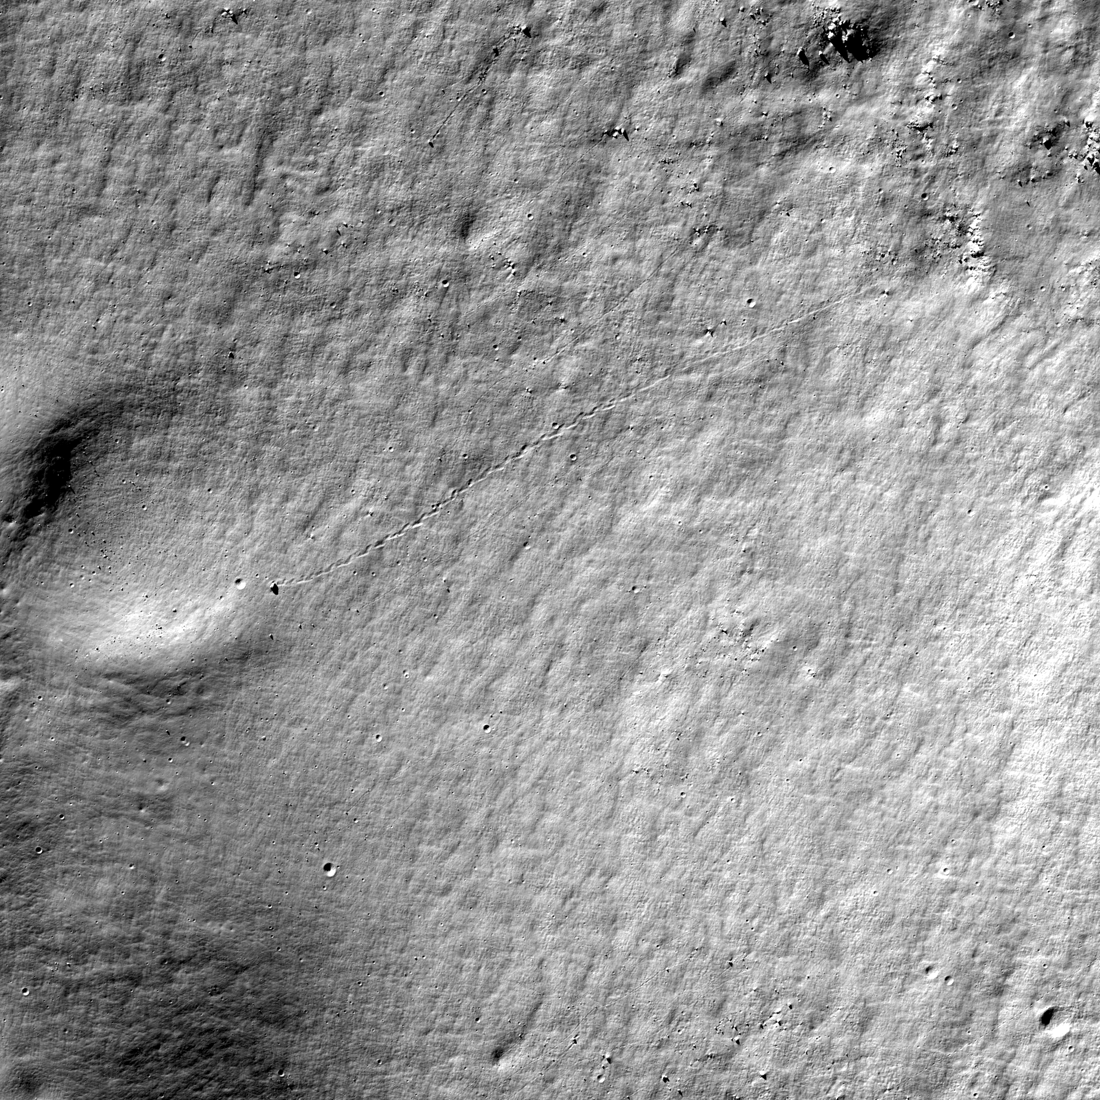 A boulder track inside the rim of Antoniadi crater